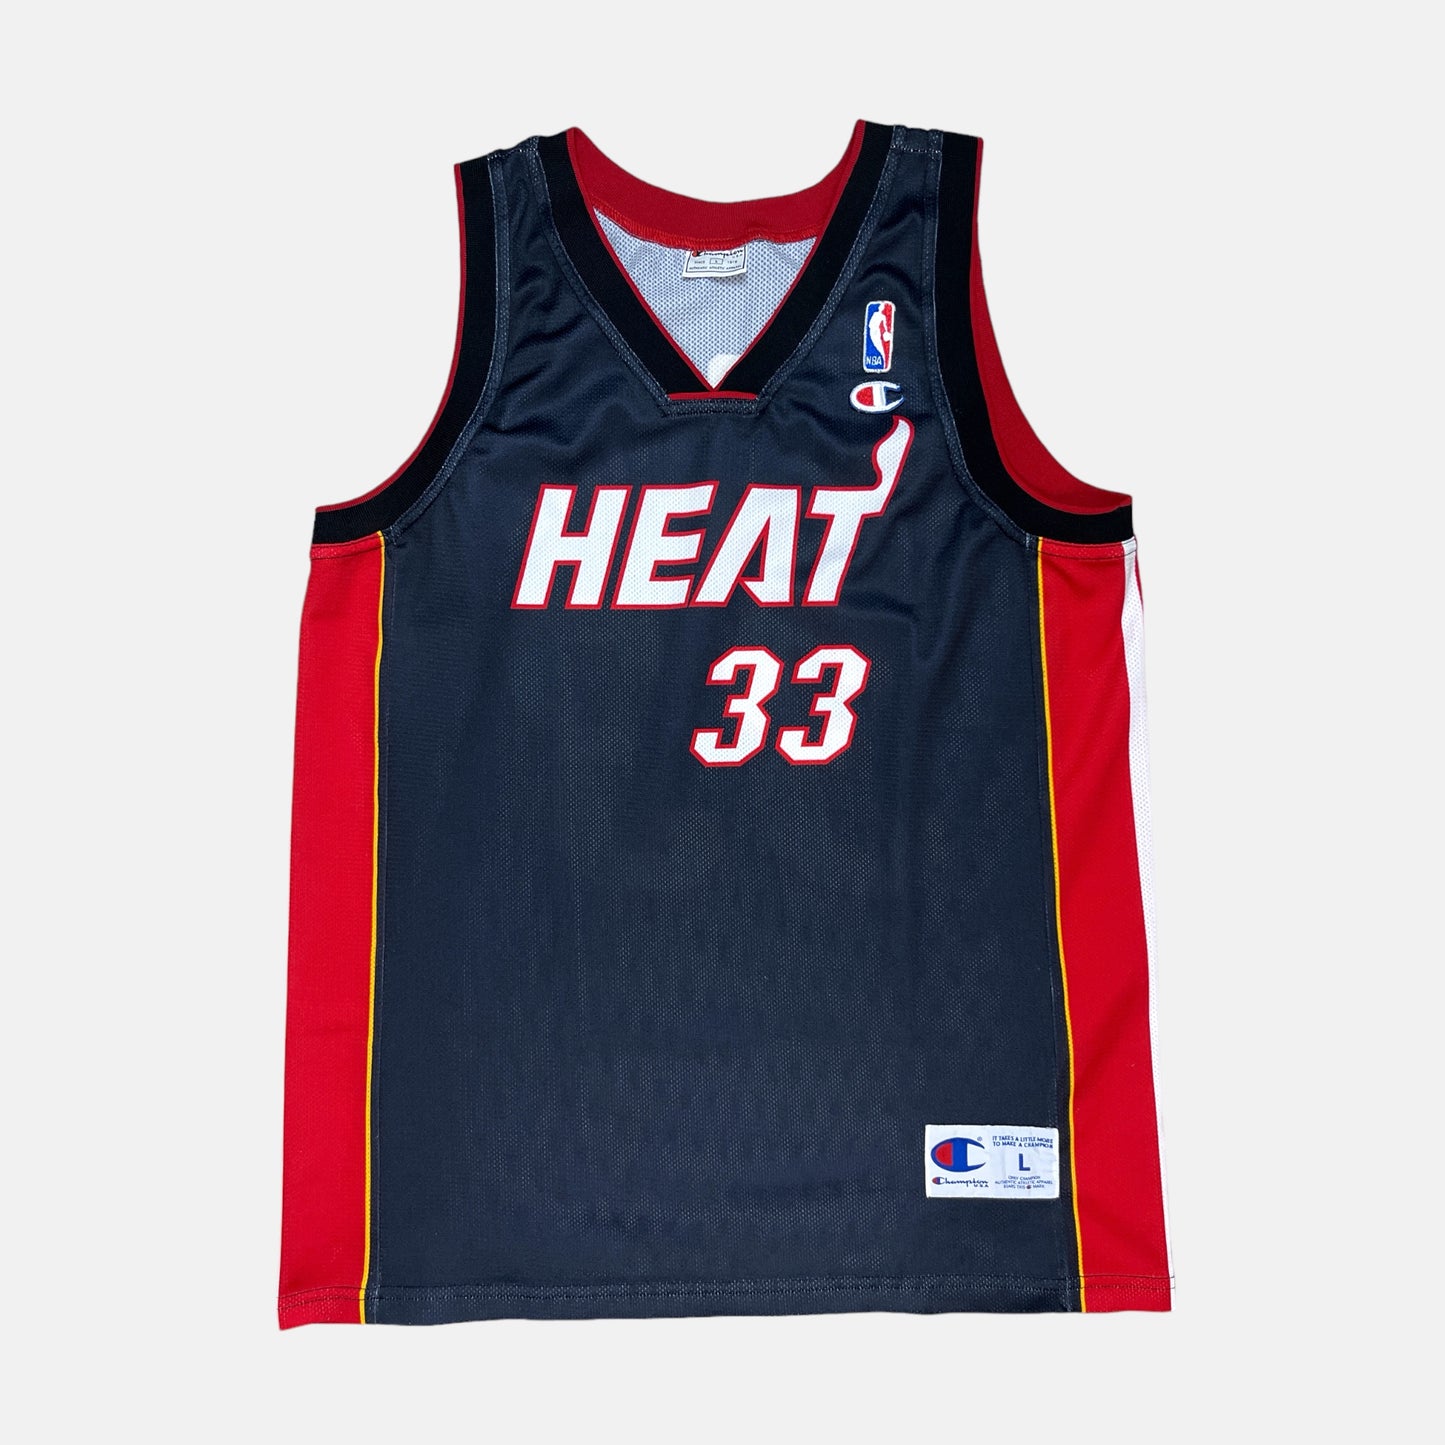 Miami Heat - Alonzo Mourning - Größe L - Champion - NBA Trikot